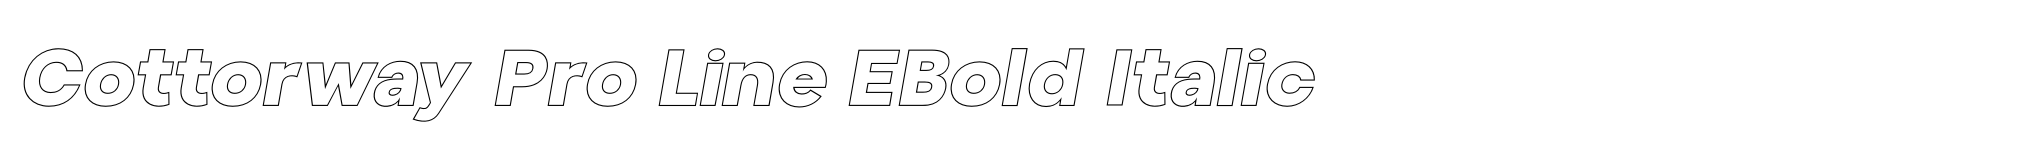 Cottorway Pro Line EBold Italic image